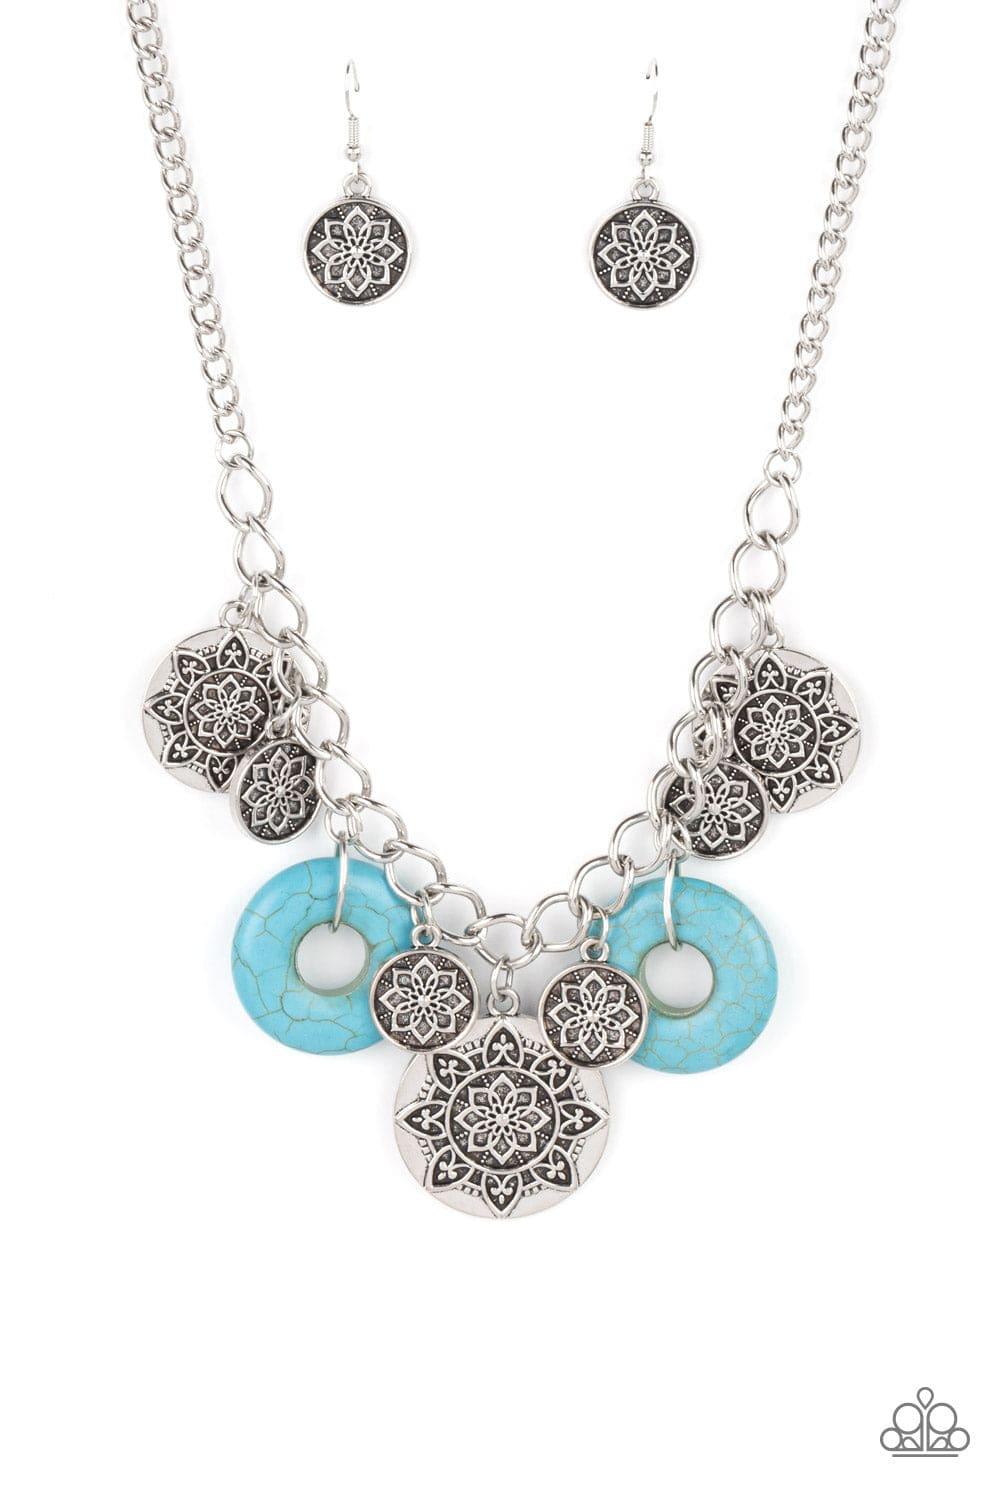 Paparazzi Accessories - Western Zen - Blue Necklace - Bling by JessieK